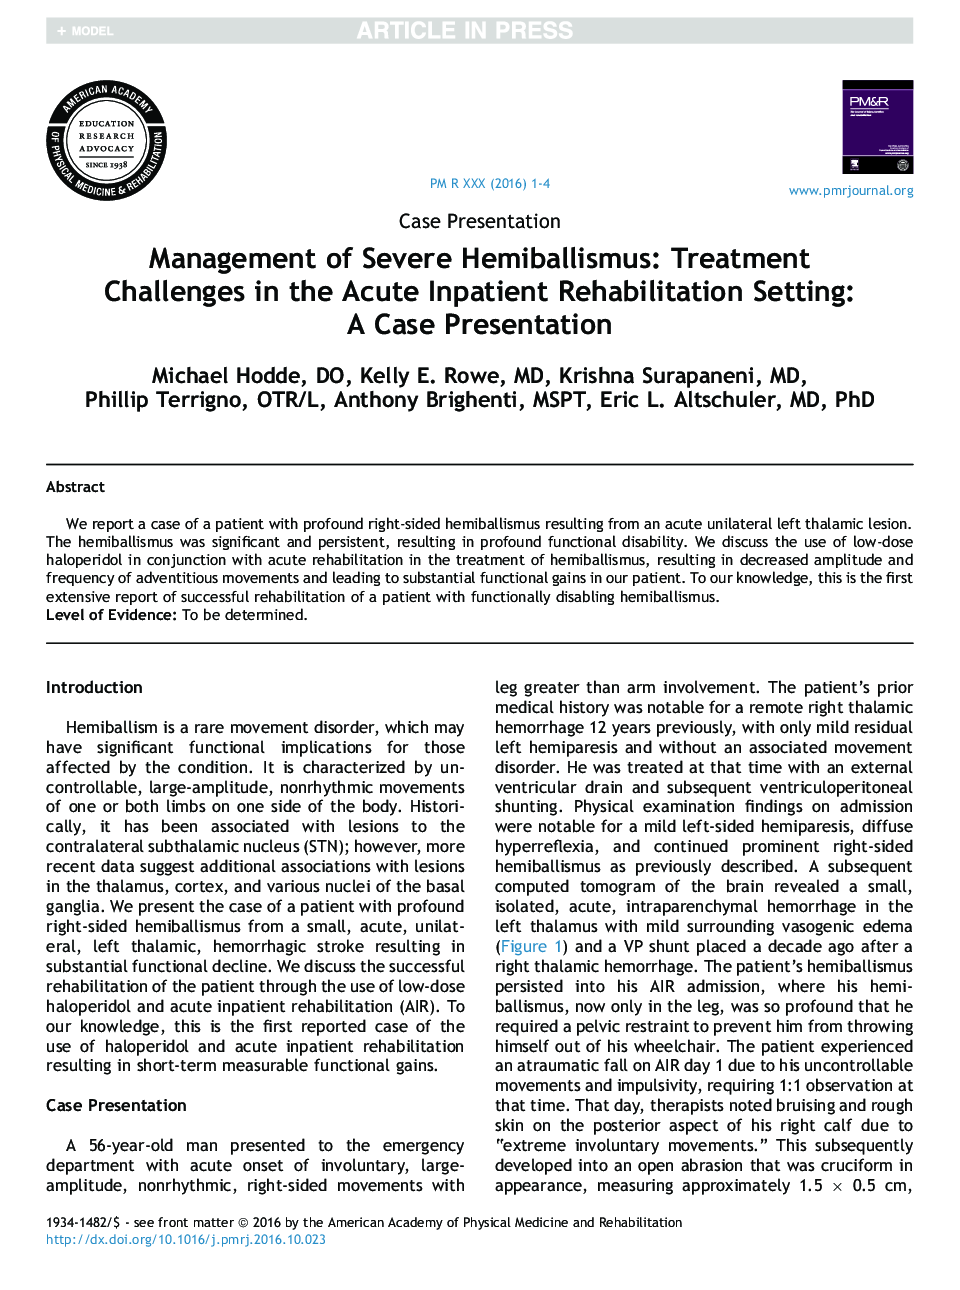 Management of Severe Hemiballismus: Treatment Challenges in the Acute Inpatient Rehabilitation Setting: A Case Presentation